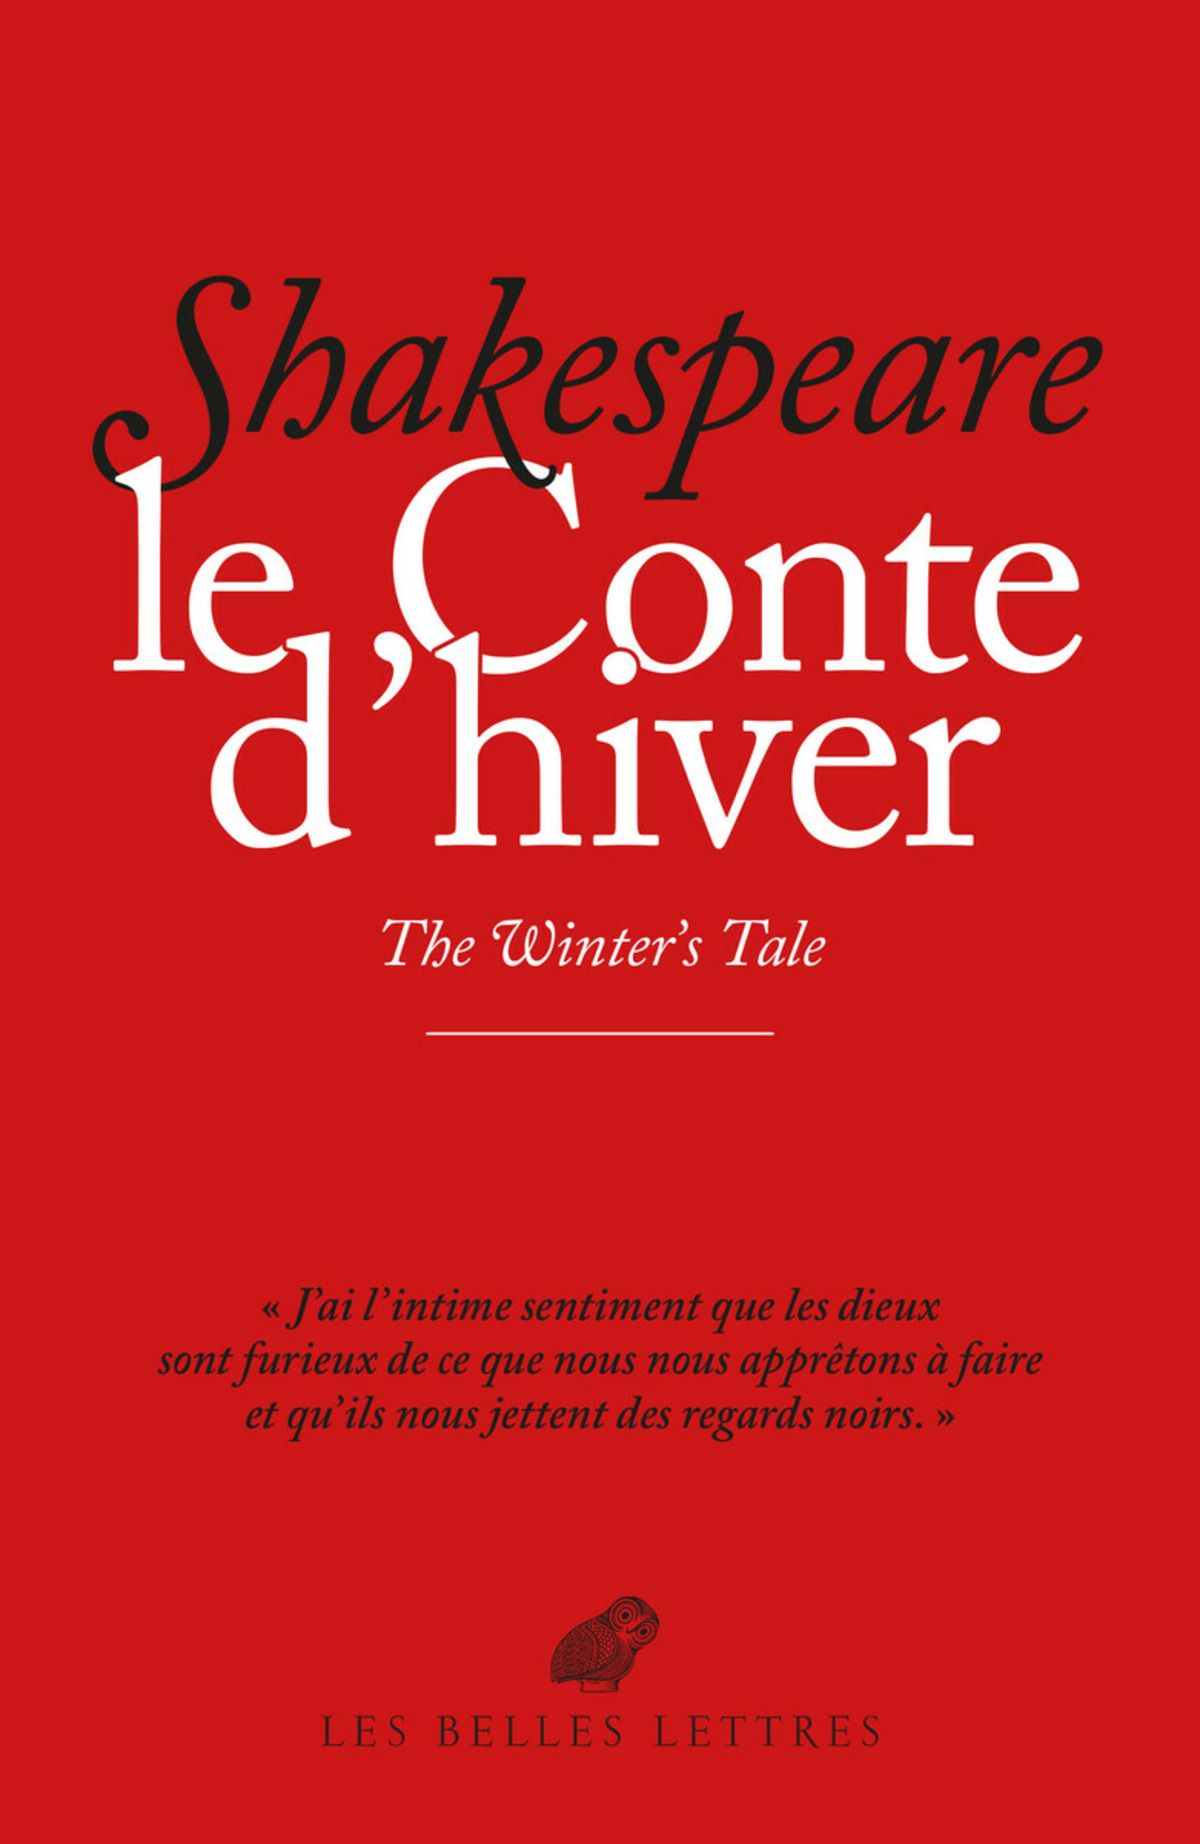 W. Shakespeare, Le Conte d'hiver. The Winter's Tale (trad. J.-R. Lemoine, F. Azoulay, Y. Brailowsky)